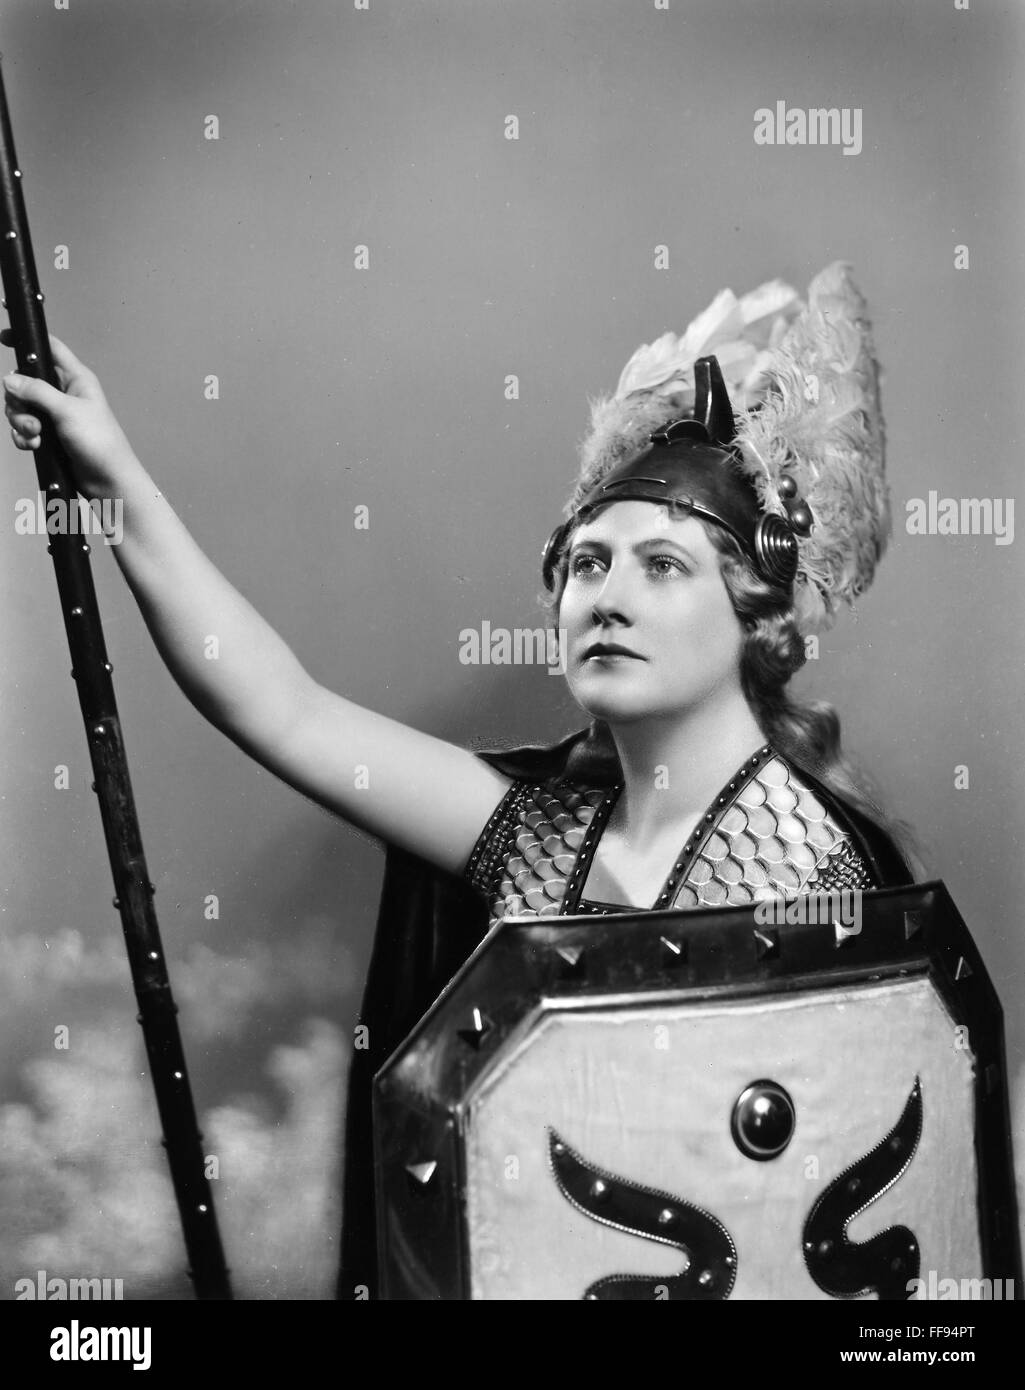 HELEN TRAUBEL (1903-1972). /nAmerican operatic soprano. In the role of Brunnhilde in Richard Wagner's opera 'Die Walkure.' Stock Photo